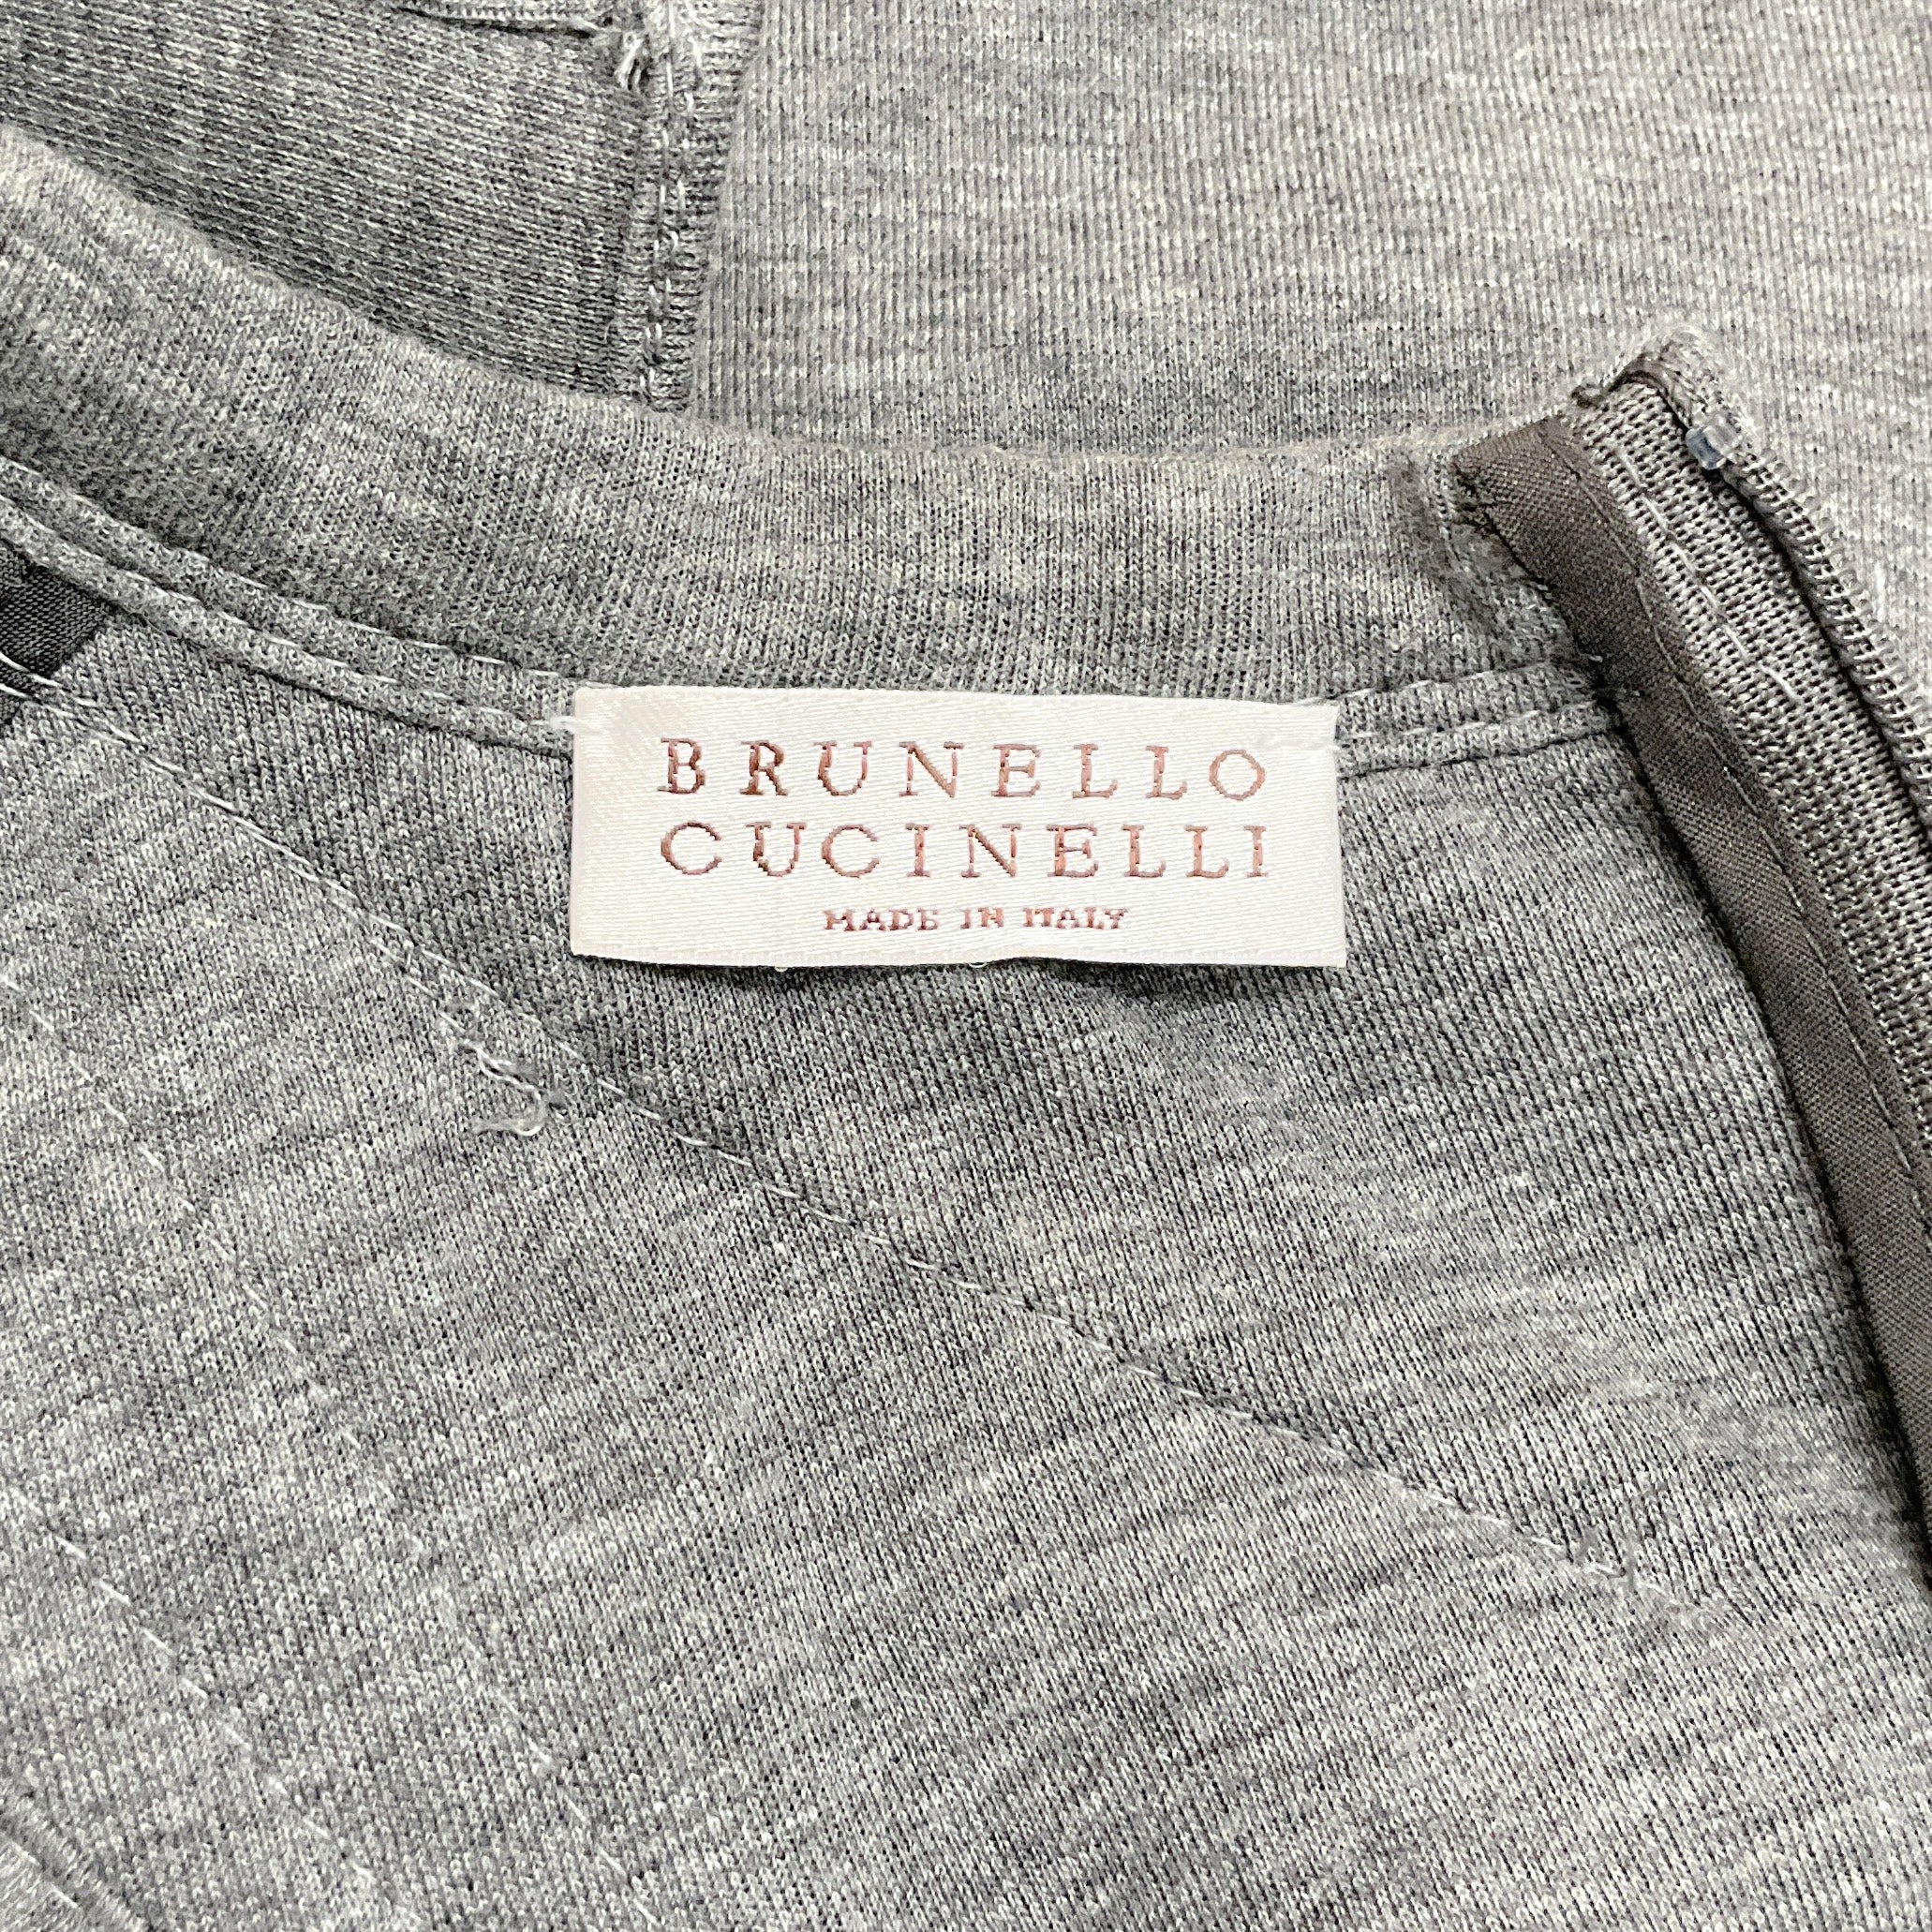 Brunello Cucinelli Heather Grey Sleeveless Dress with Ruffle Detail